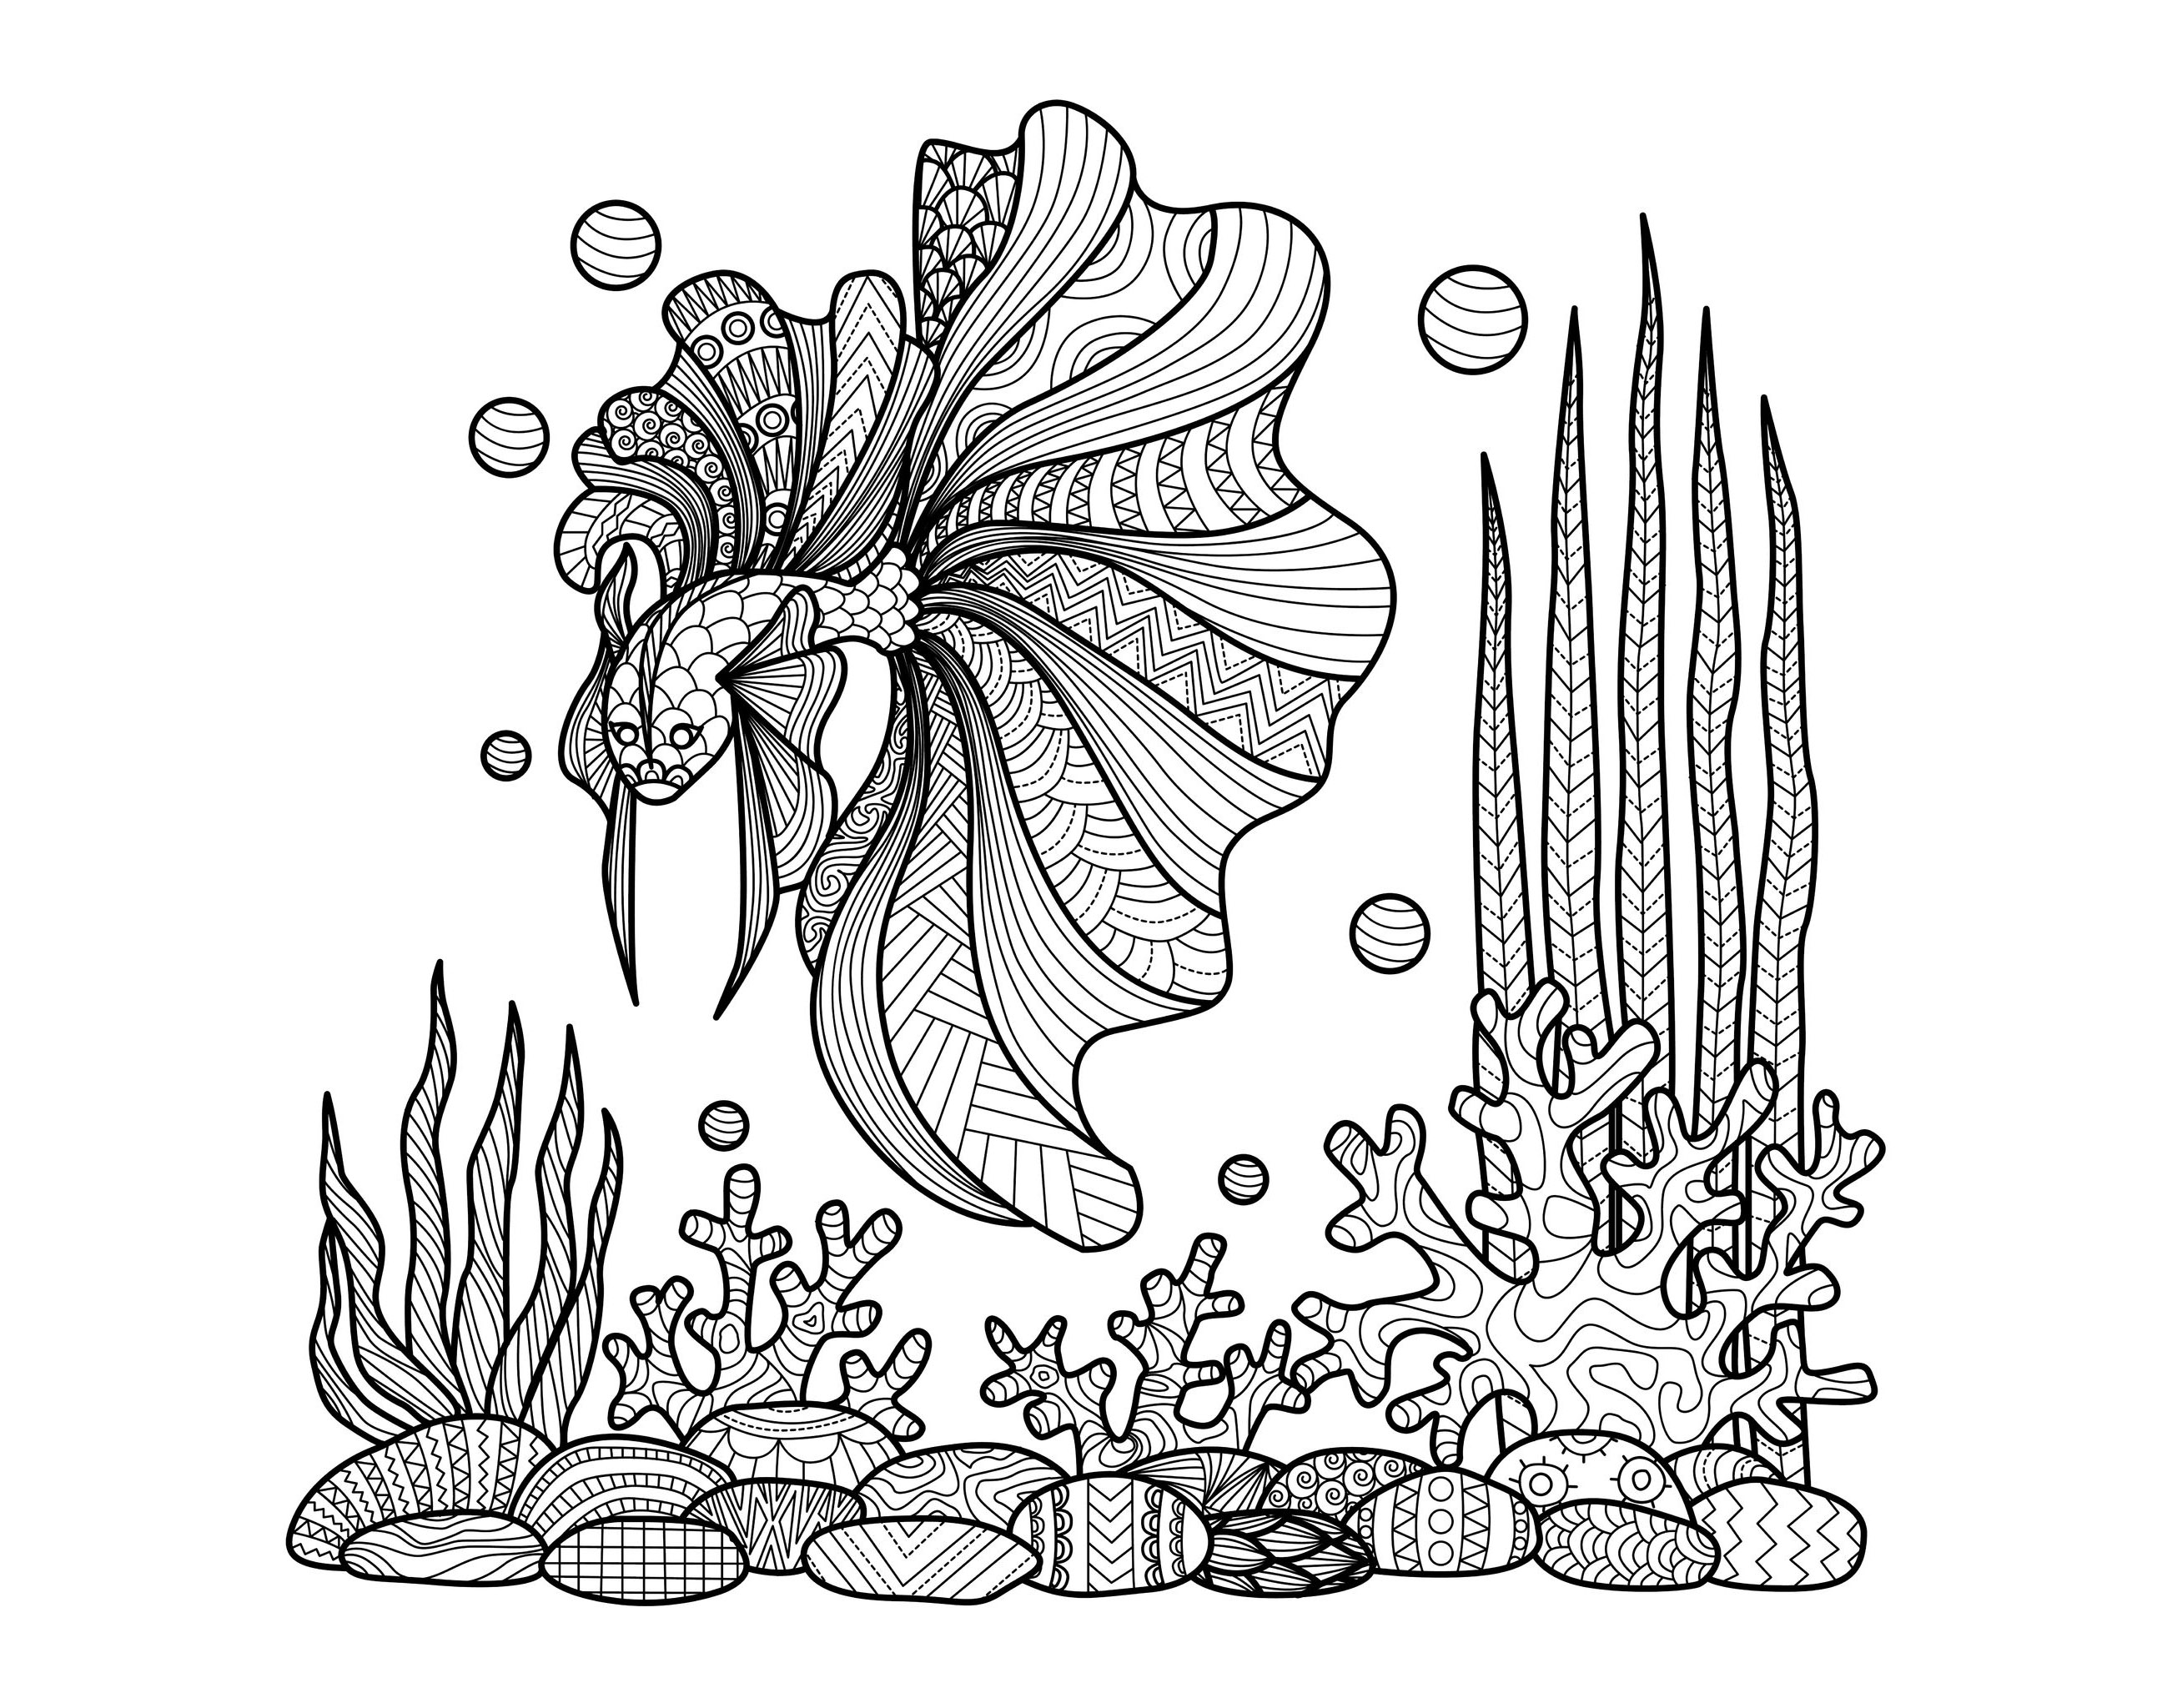 Poisson sur coraux style Zentangle, par Bimdeedee